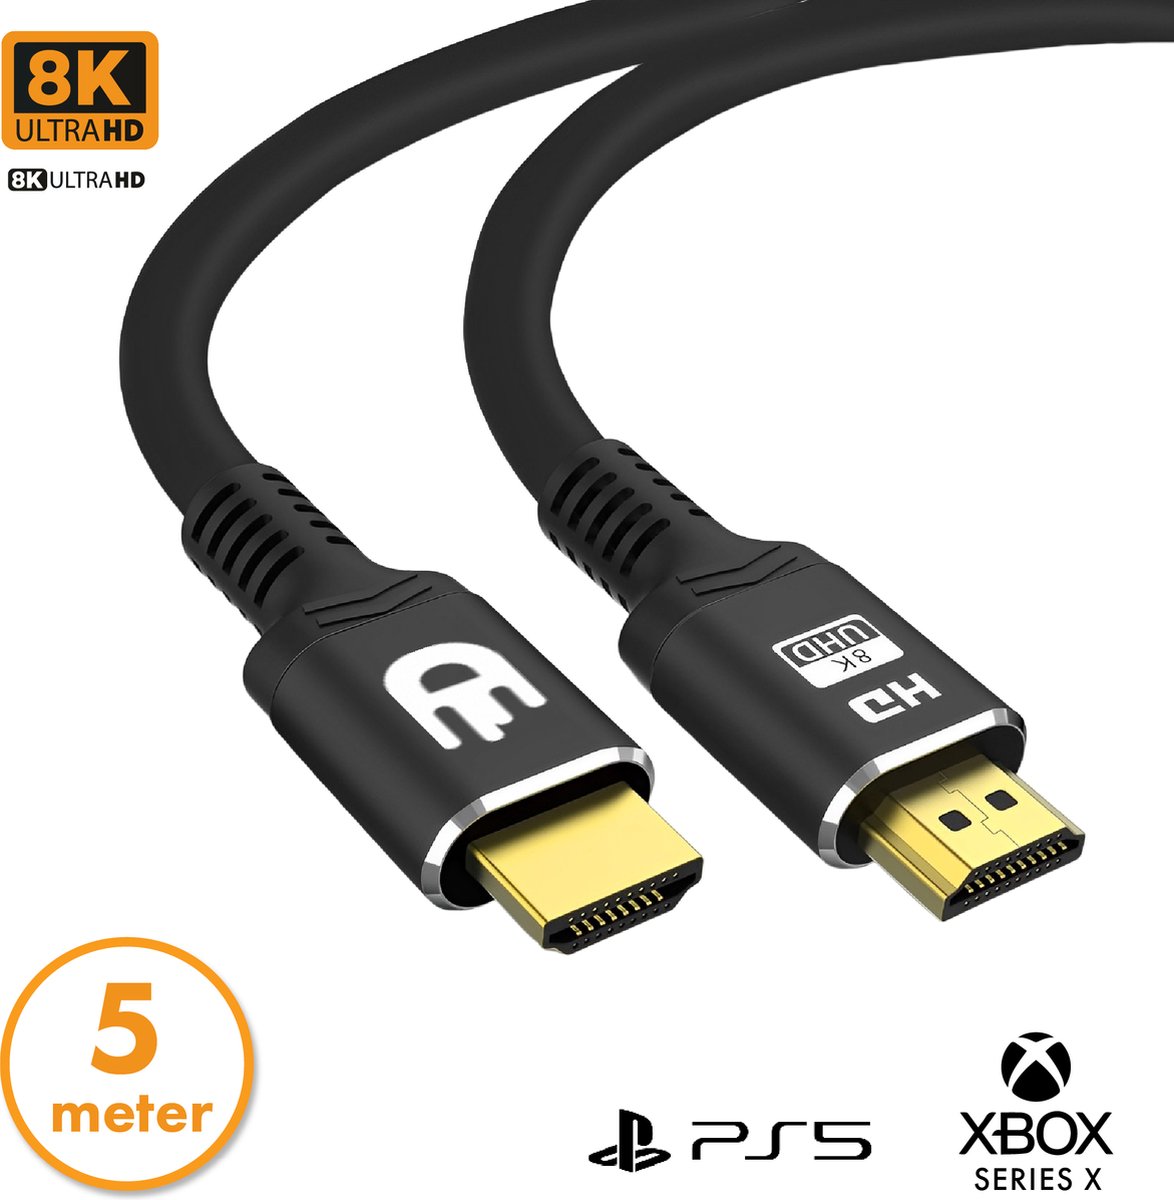 Drivv. Premium HDMI Kabel 2.1 - Ultra HD 8K - HDMI naar HDMI - Xbox Series X & PS5 - 5 meter - Zwart